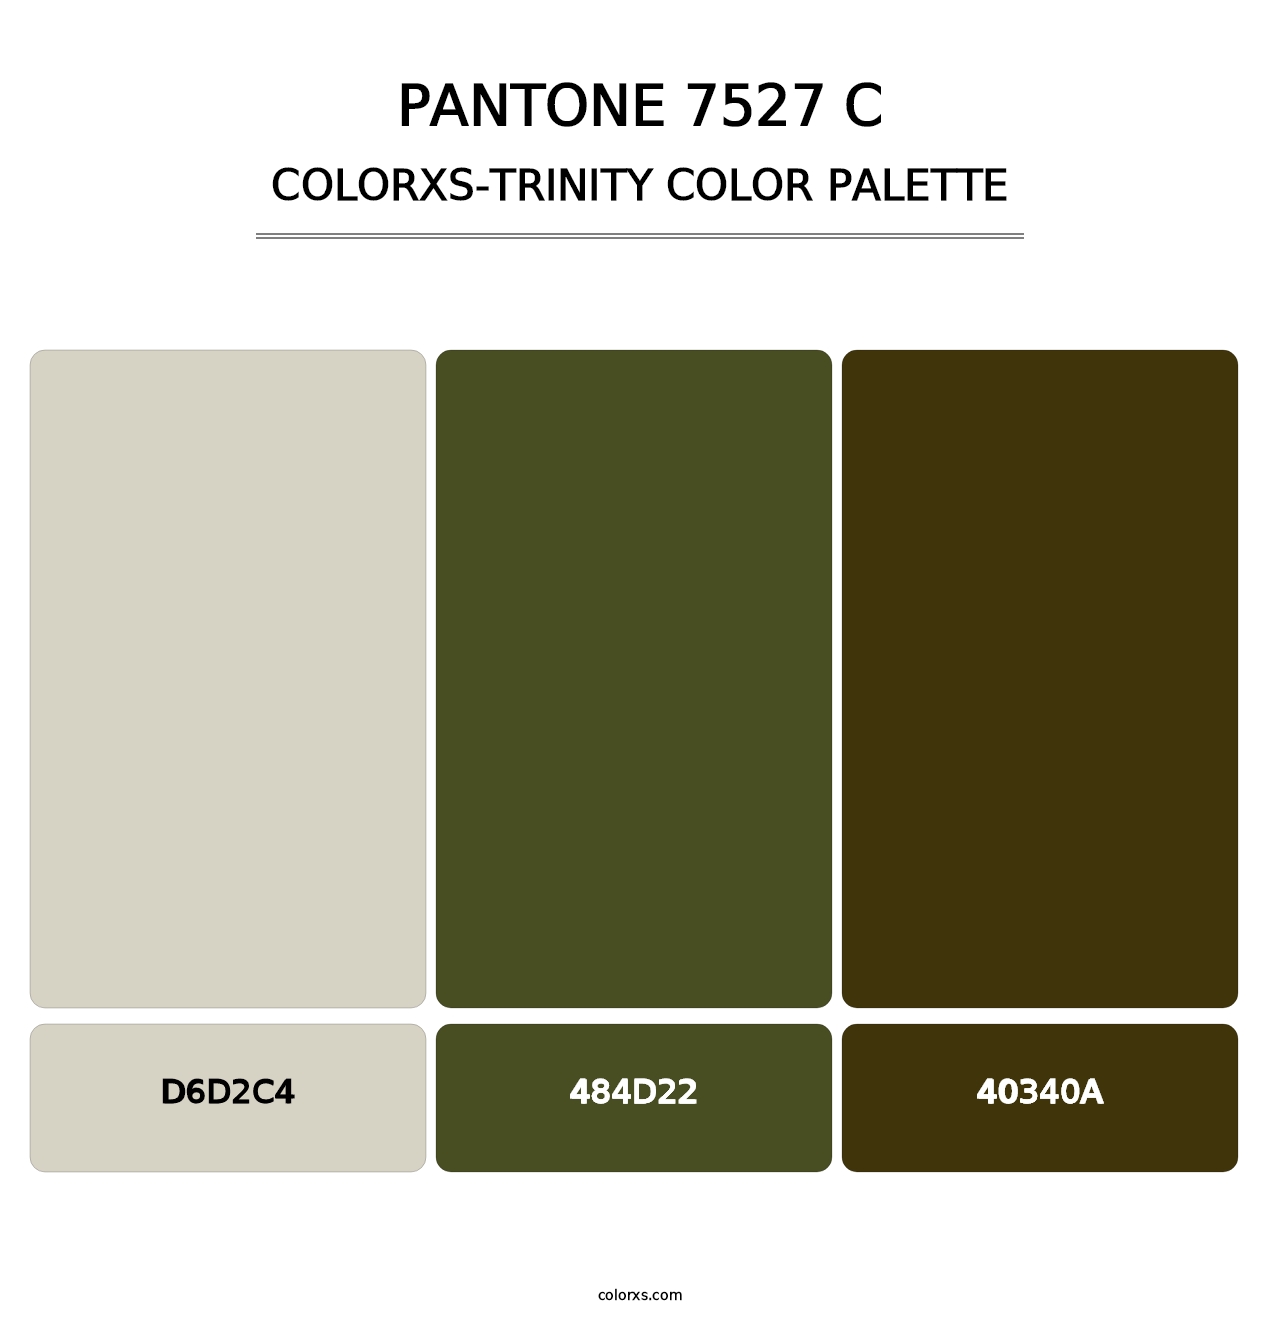 PANTONE 7527 C - Colorxs Trinity Palette